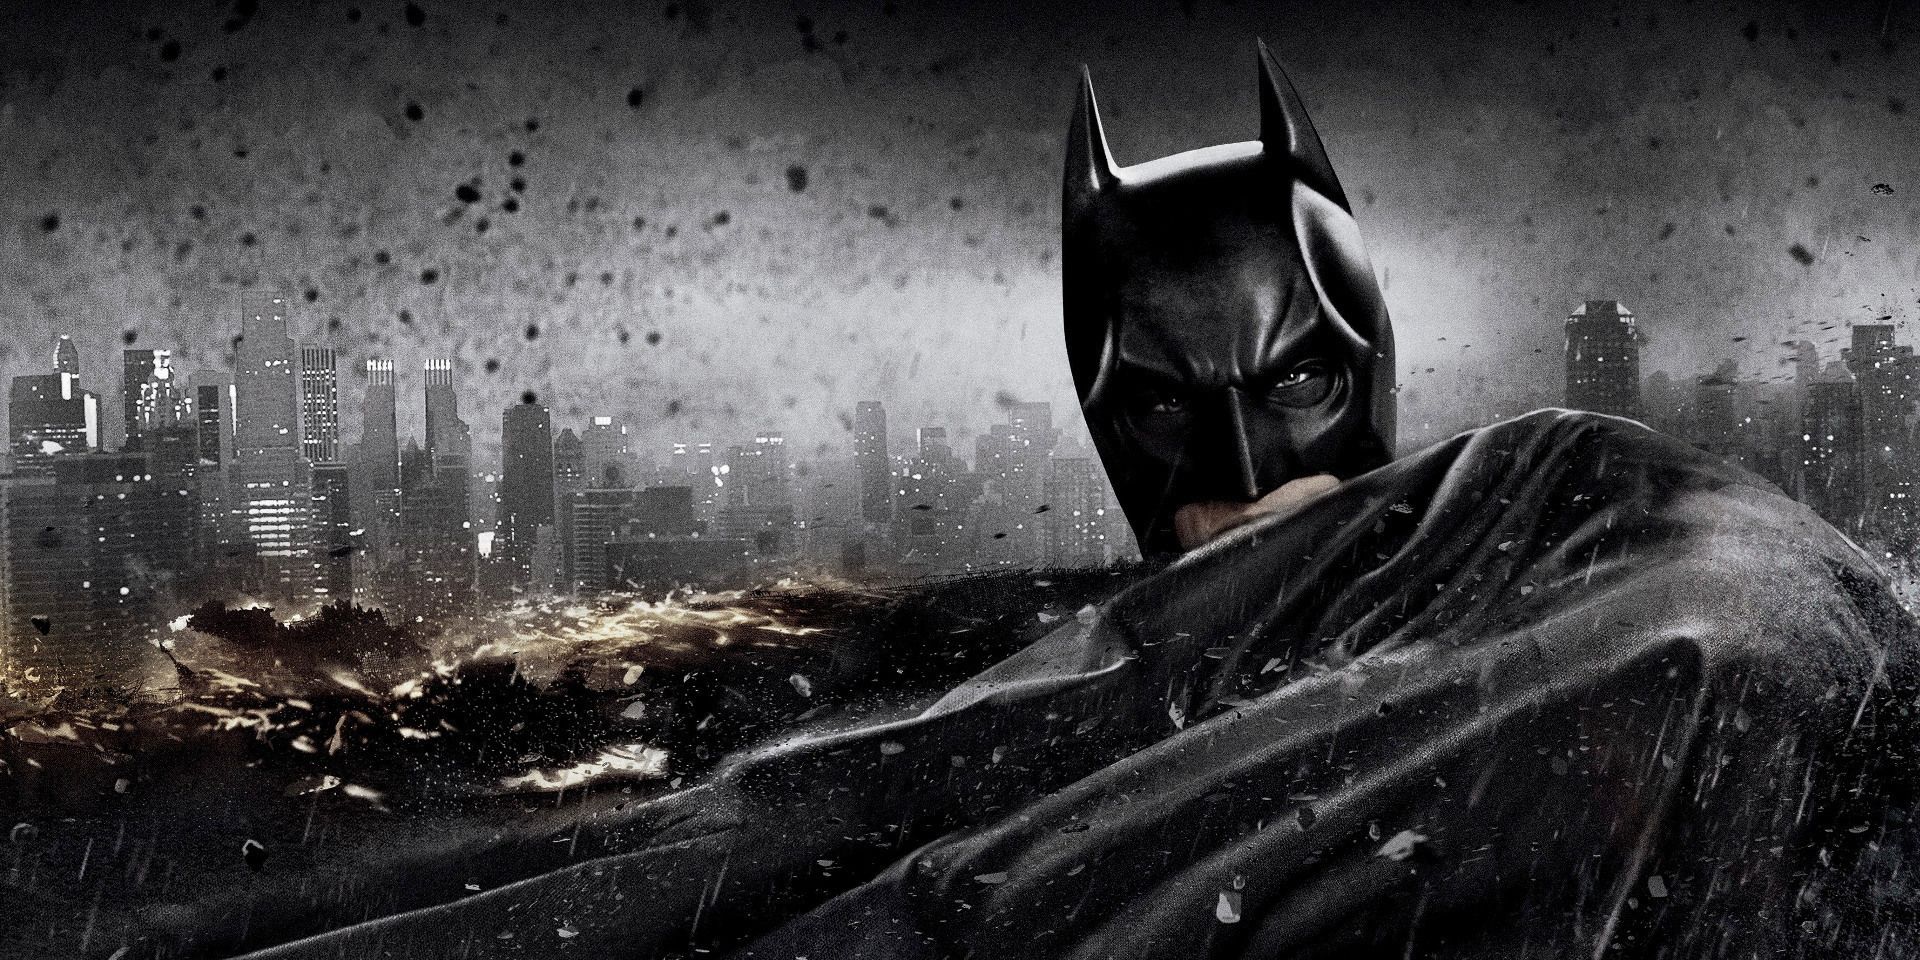 20 Reasons Why The Dark Knight Is Still The Best Superhero Movie